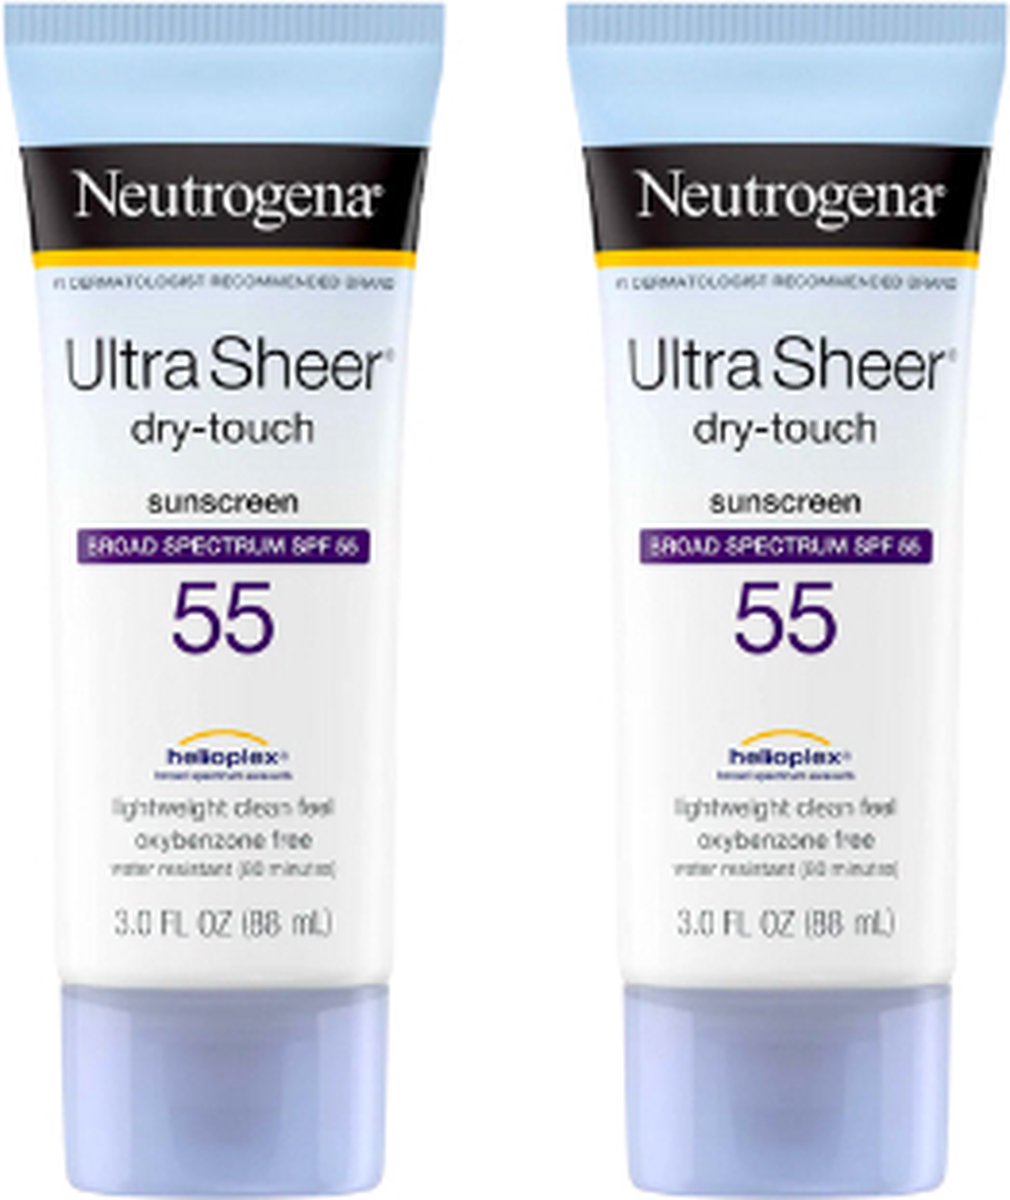 Neutrogena - Ultra Sheer Dry-Touch Sunscreen - Neutrogena Dagcrème met SPF 55 - Duo-pack - 2 stuks - 196ml